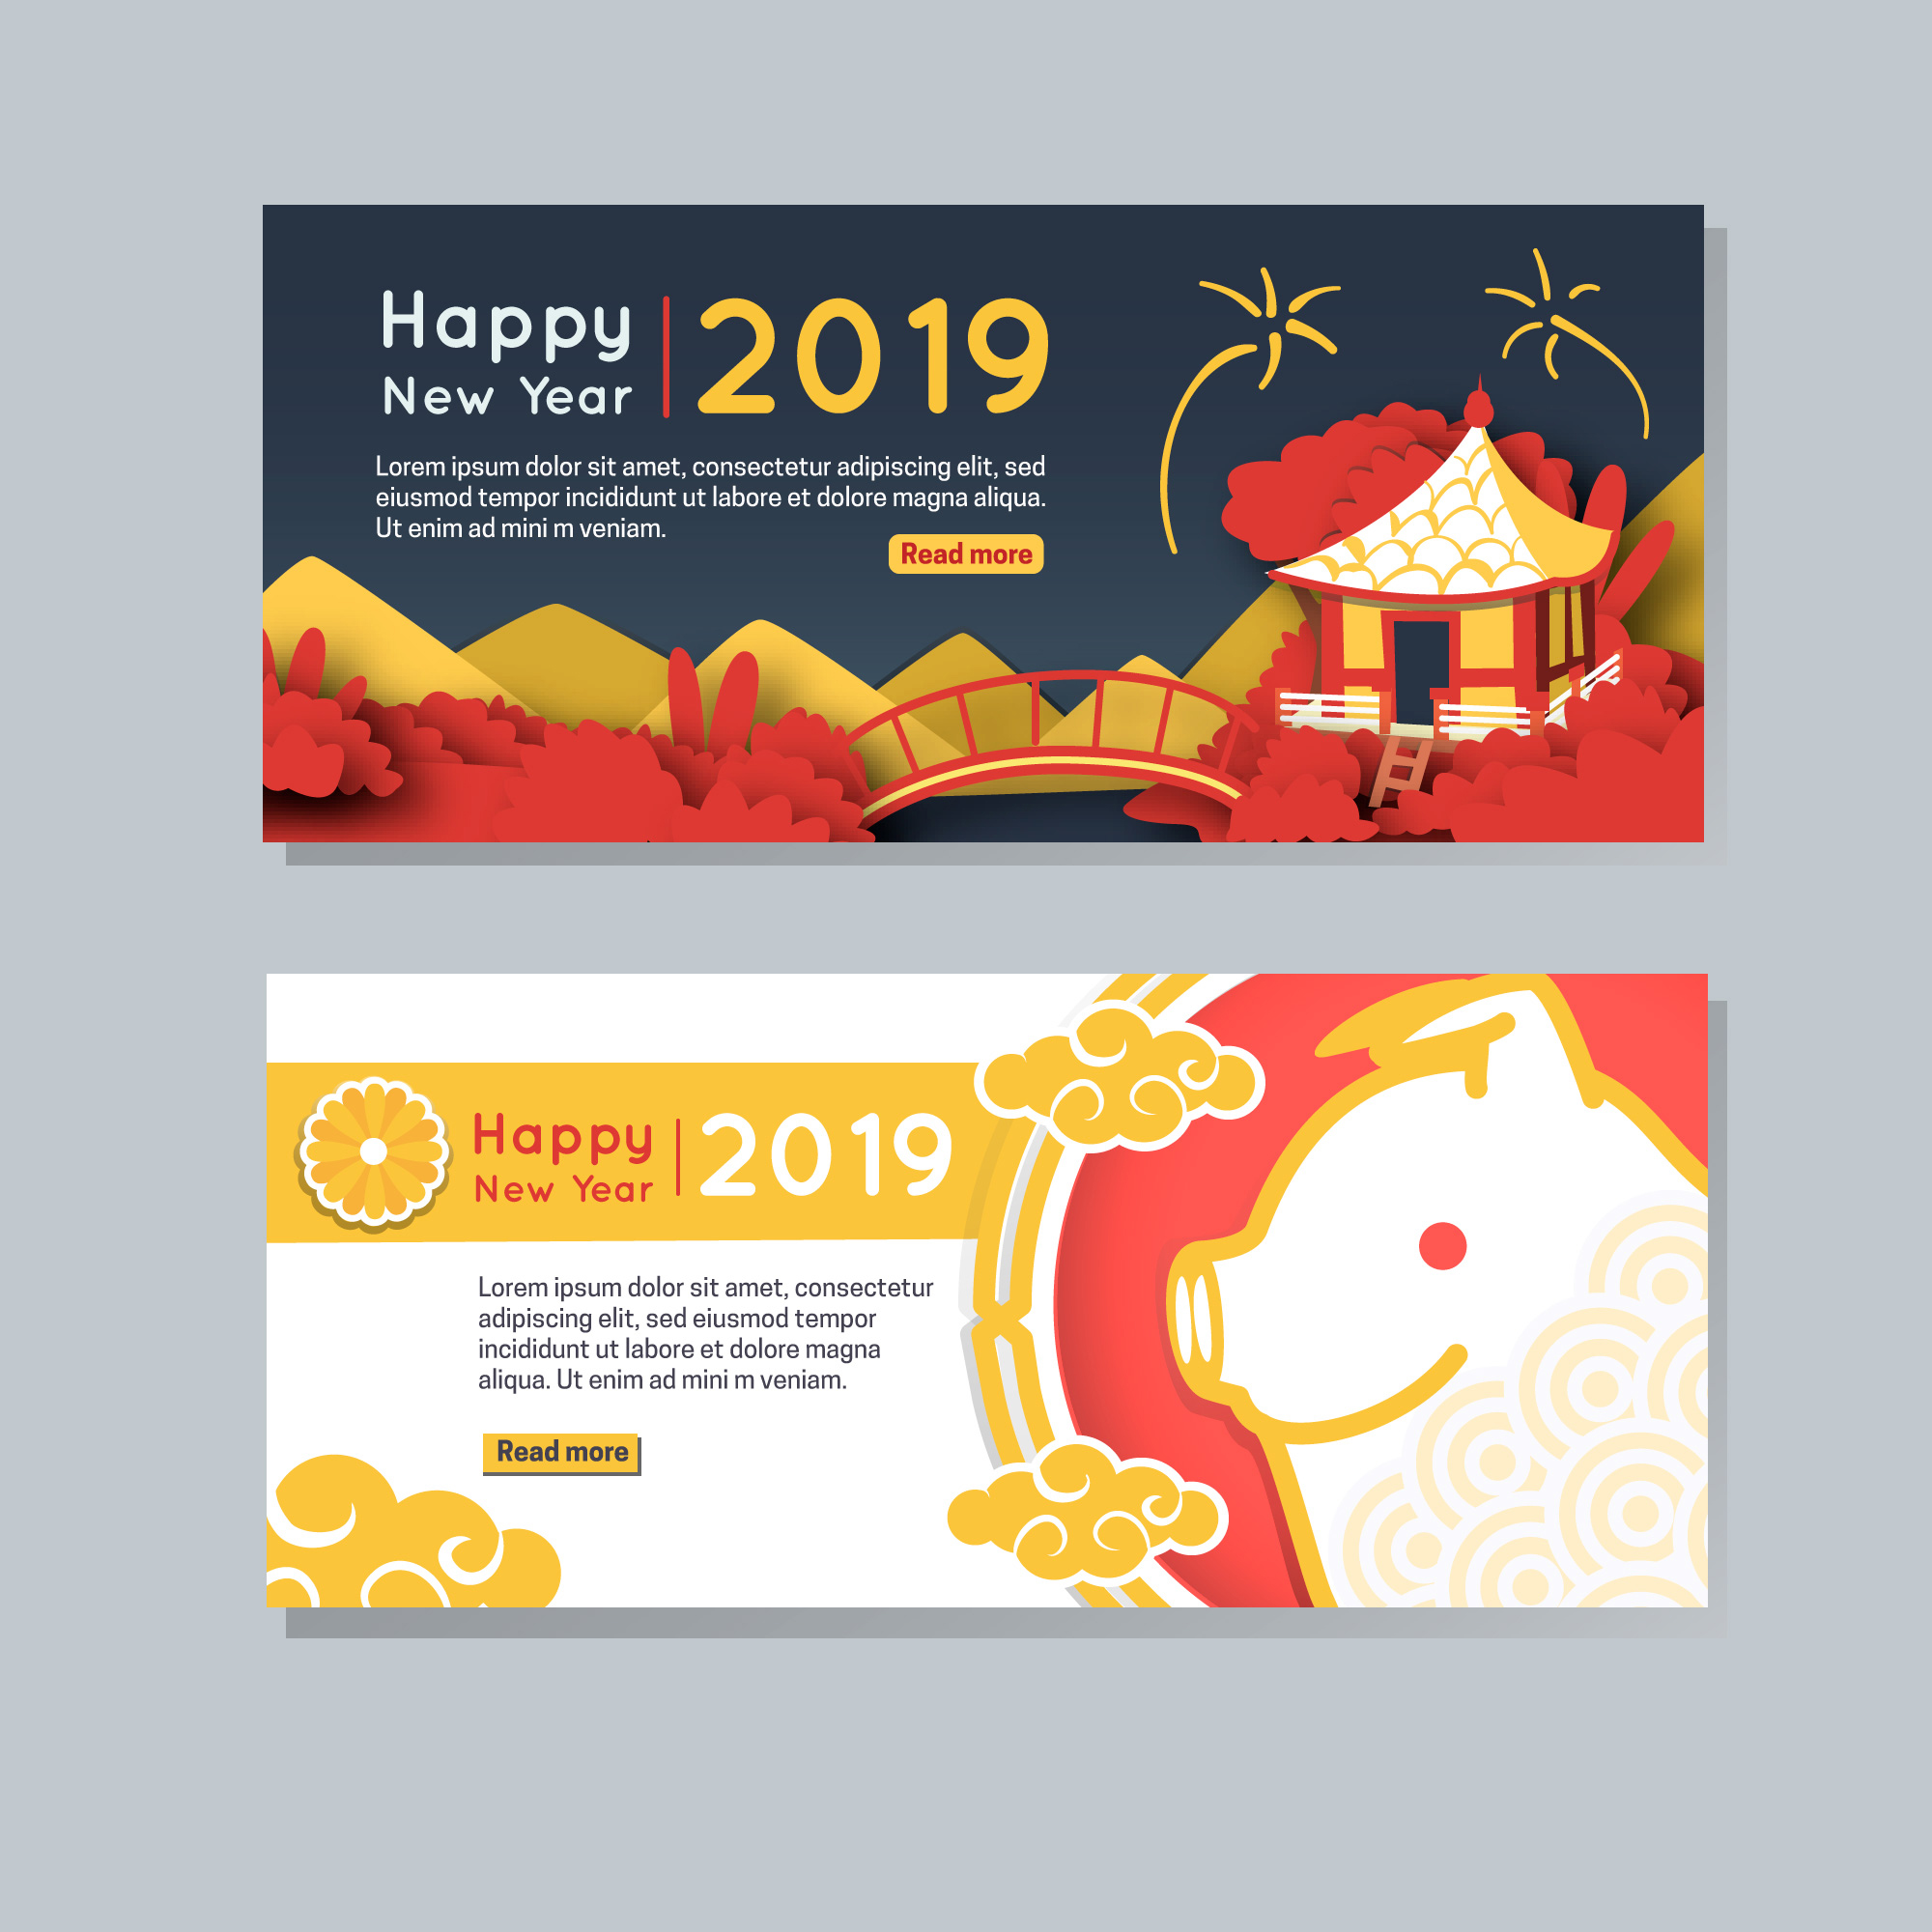 2019新年农历猪年贺卡矢量素材模板 2019 New Year Lunar Year Of The Pig Greeting Card Vector Material Template插图4